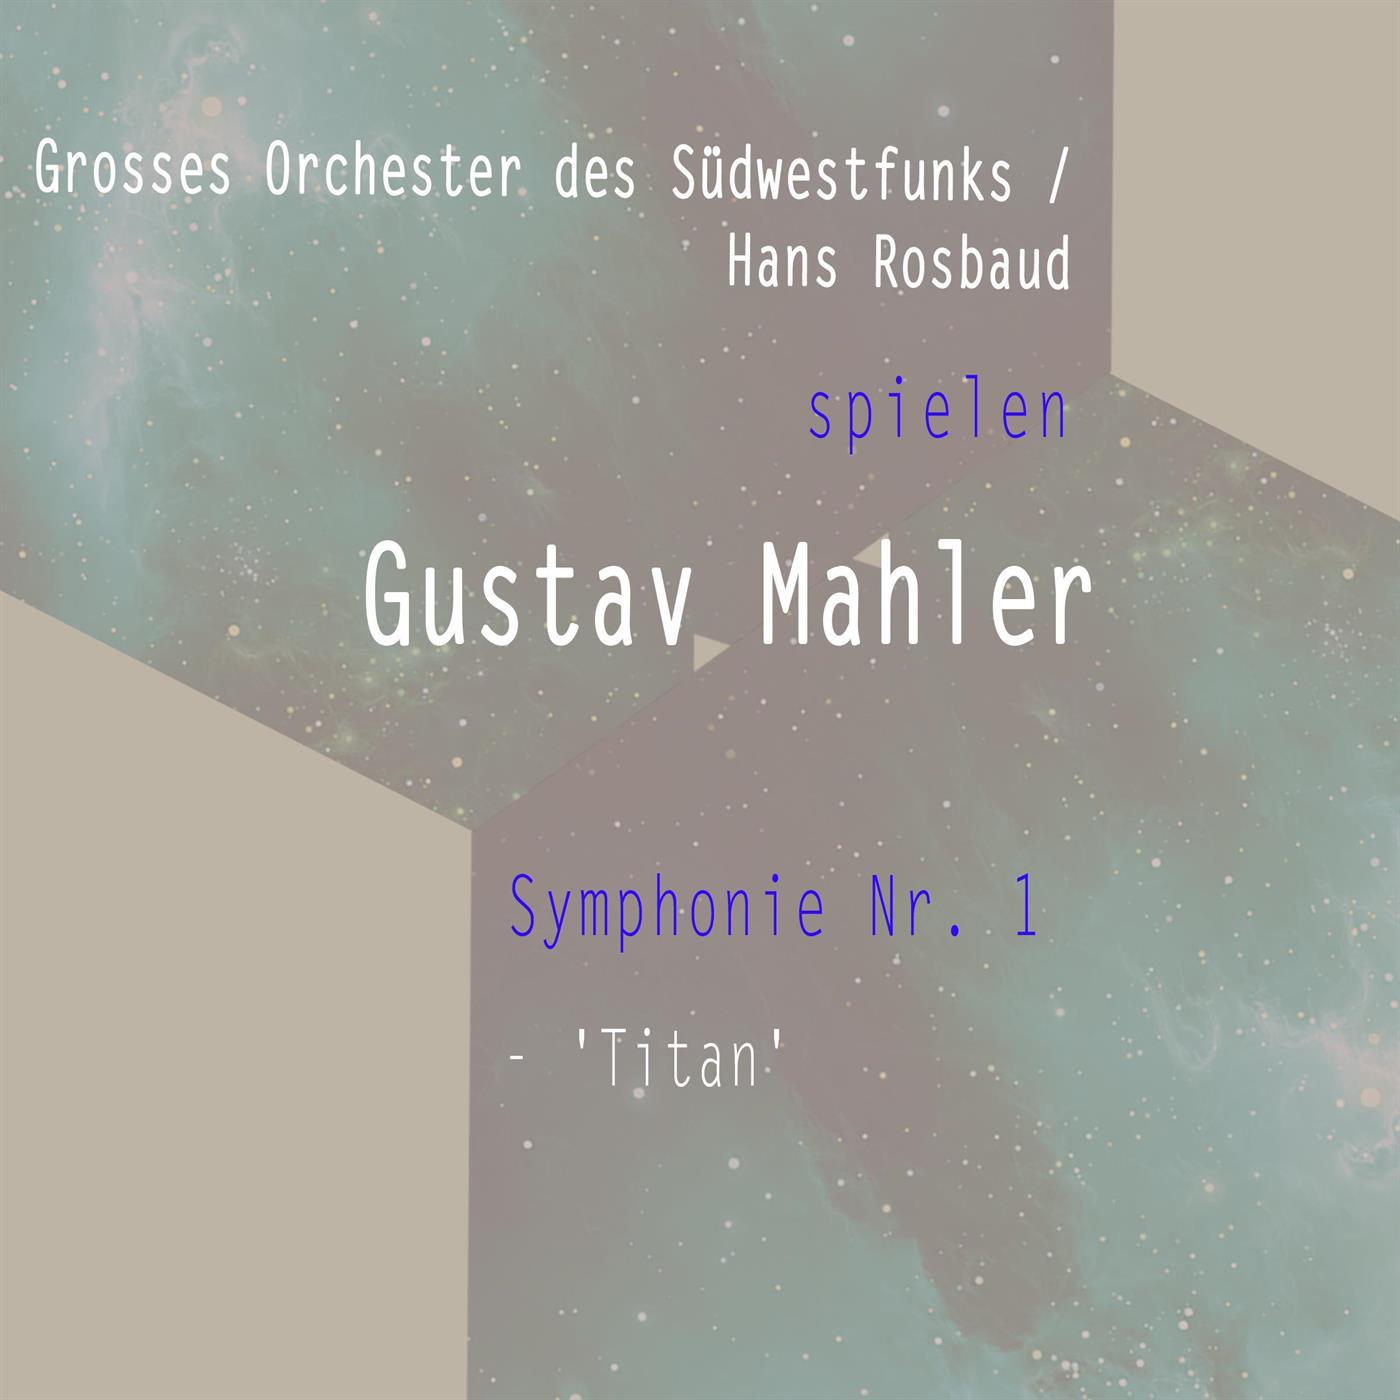 Grosses Orchester des Südwestfunks - Symphonie Nr. 1 - 'Titan' D Major: Feierlich und gemessen, ohne zu schleppen (solennel et mesuré, sans traîner)